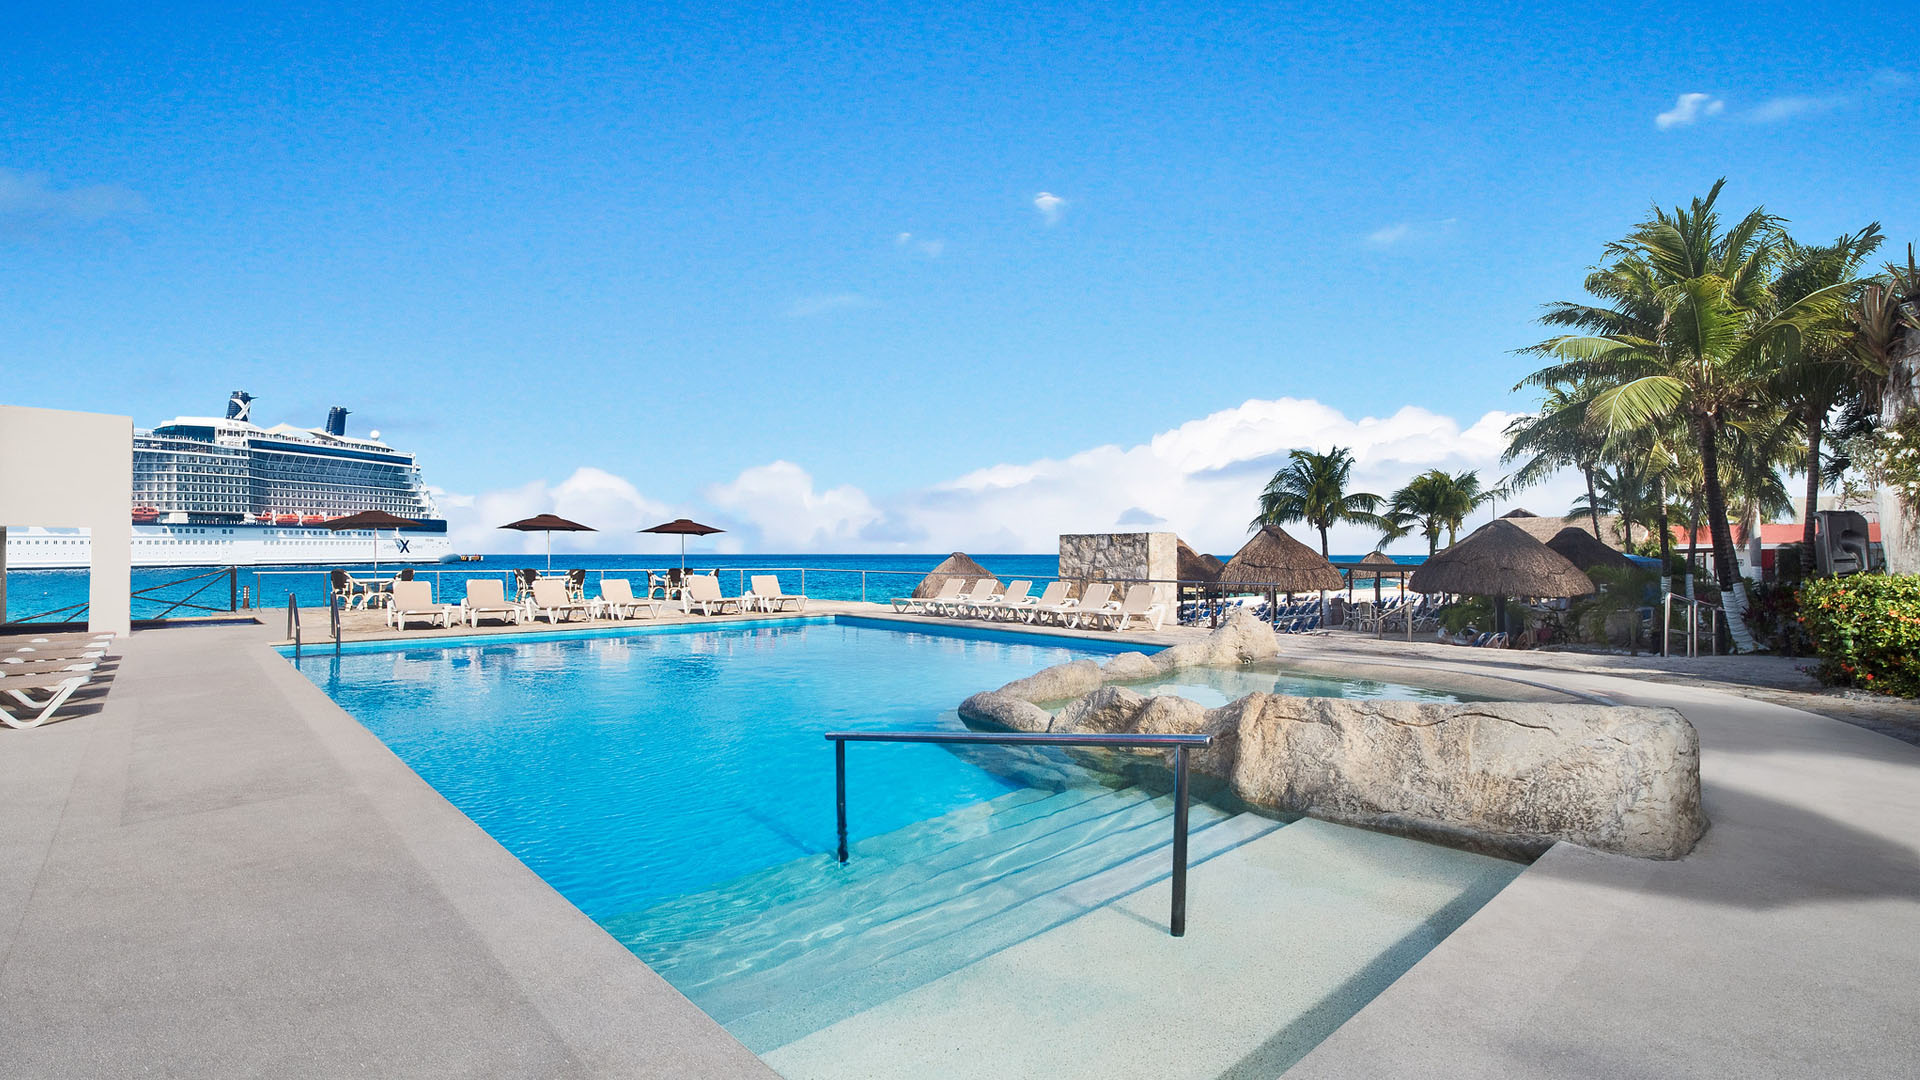 All-inclusive hotel, Cozumel luxury, El Cid La Ceiba Resort, Ultimate relaxation, 1920x1080 Full HD Desktop